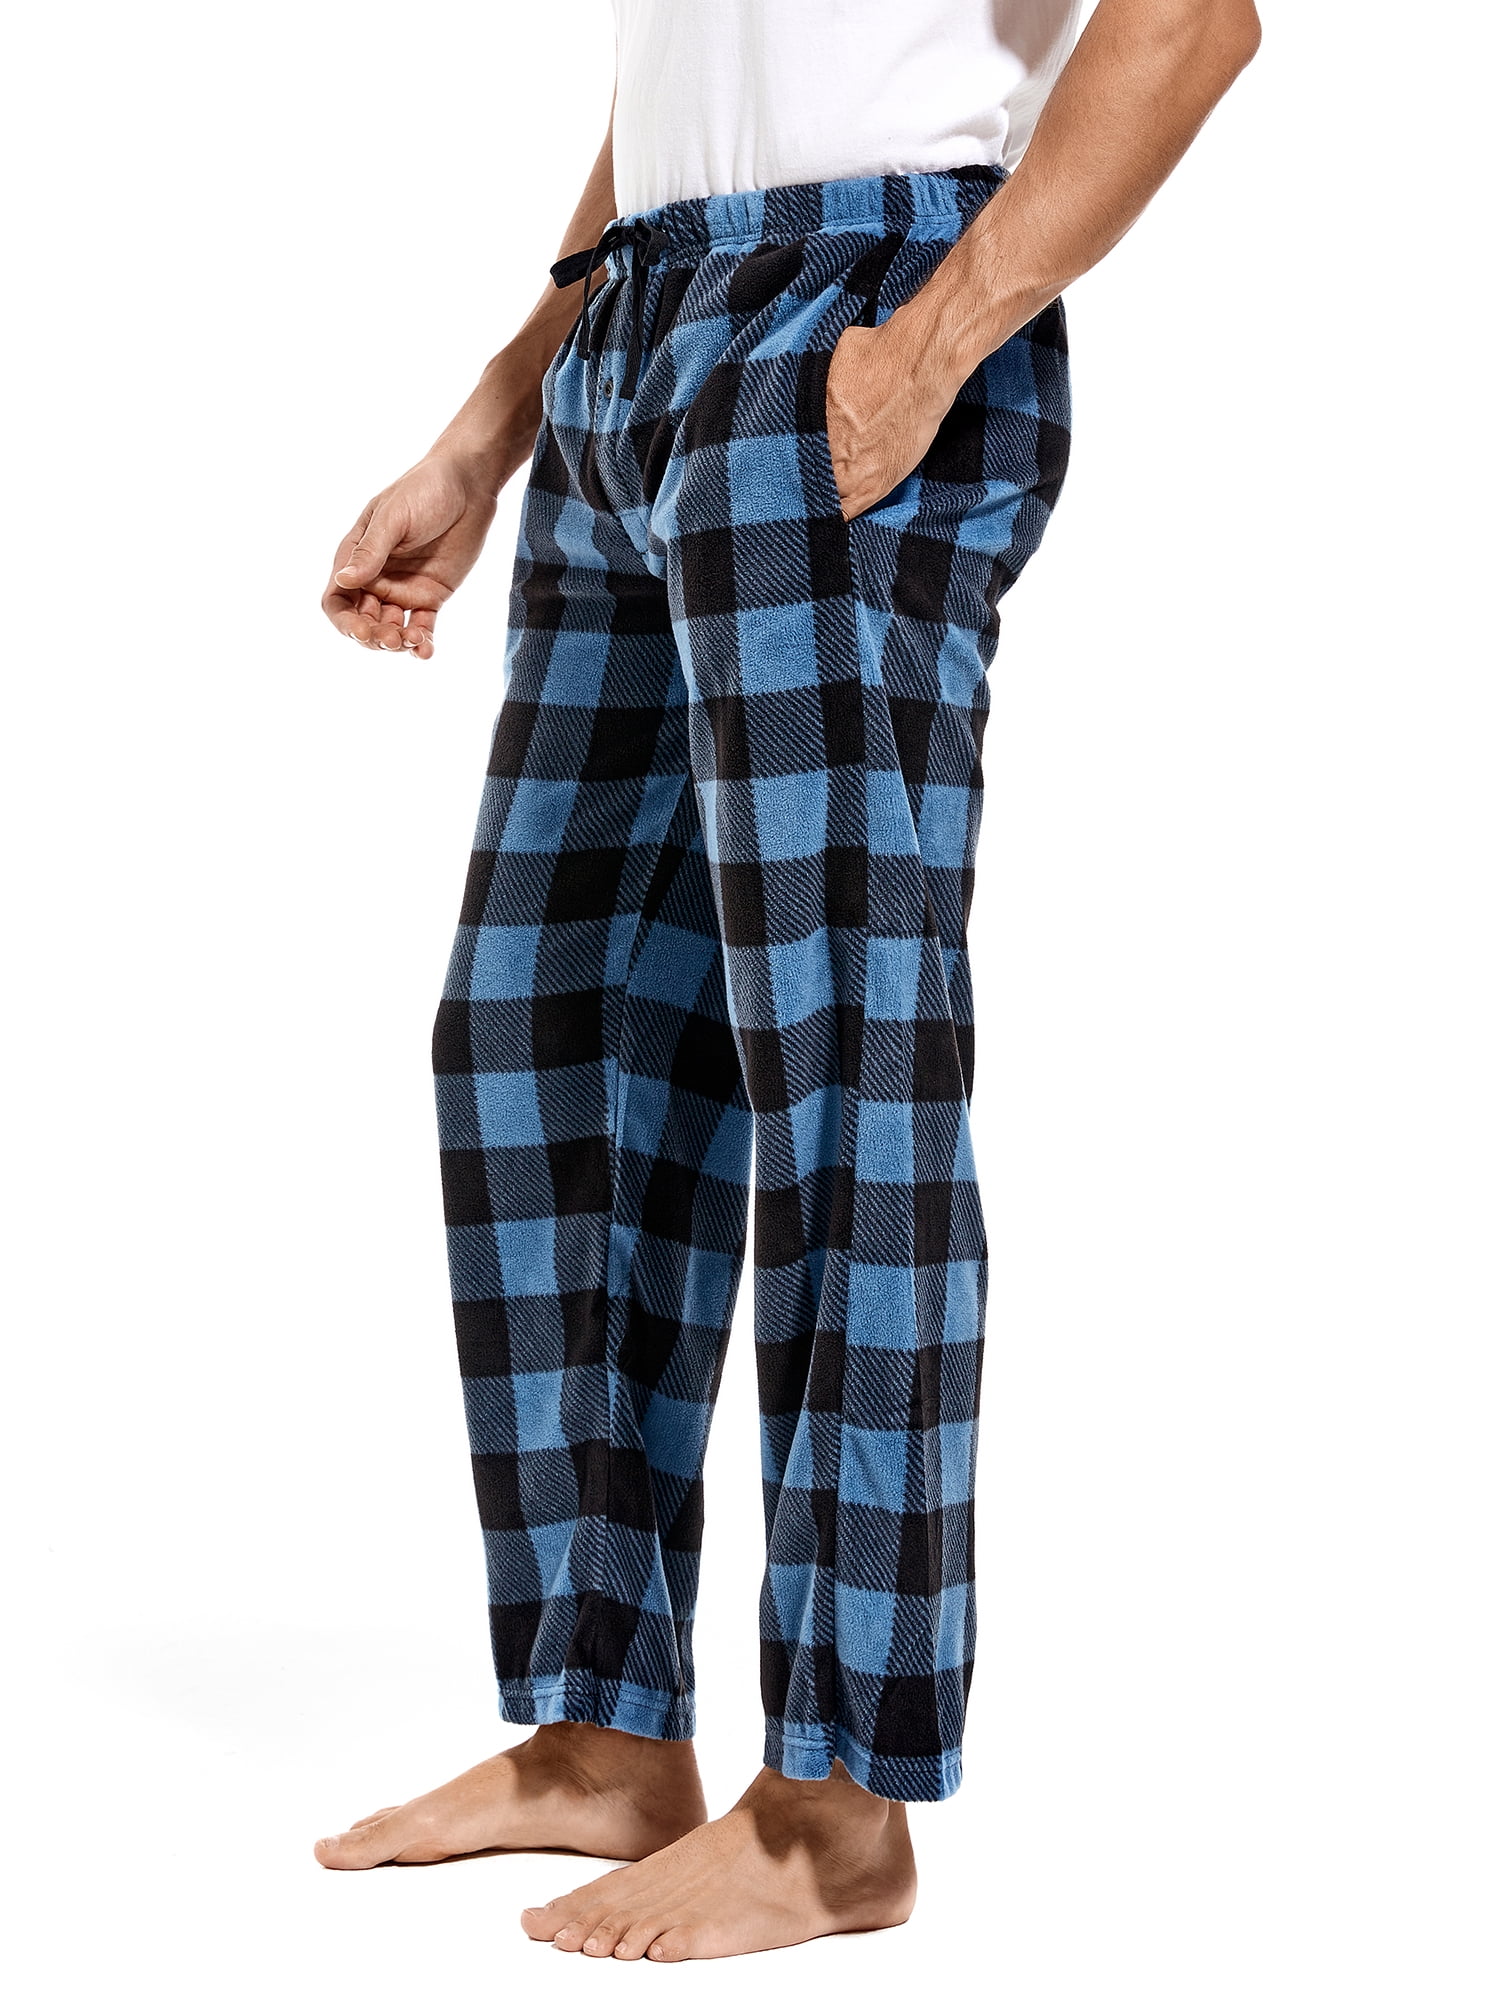 AVATAR Mens Pajama Pants The Last Airbender Chibi Size S,L,2XL Lounge  Womens NWT | eBay